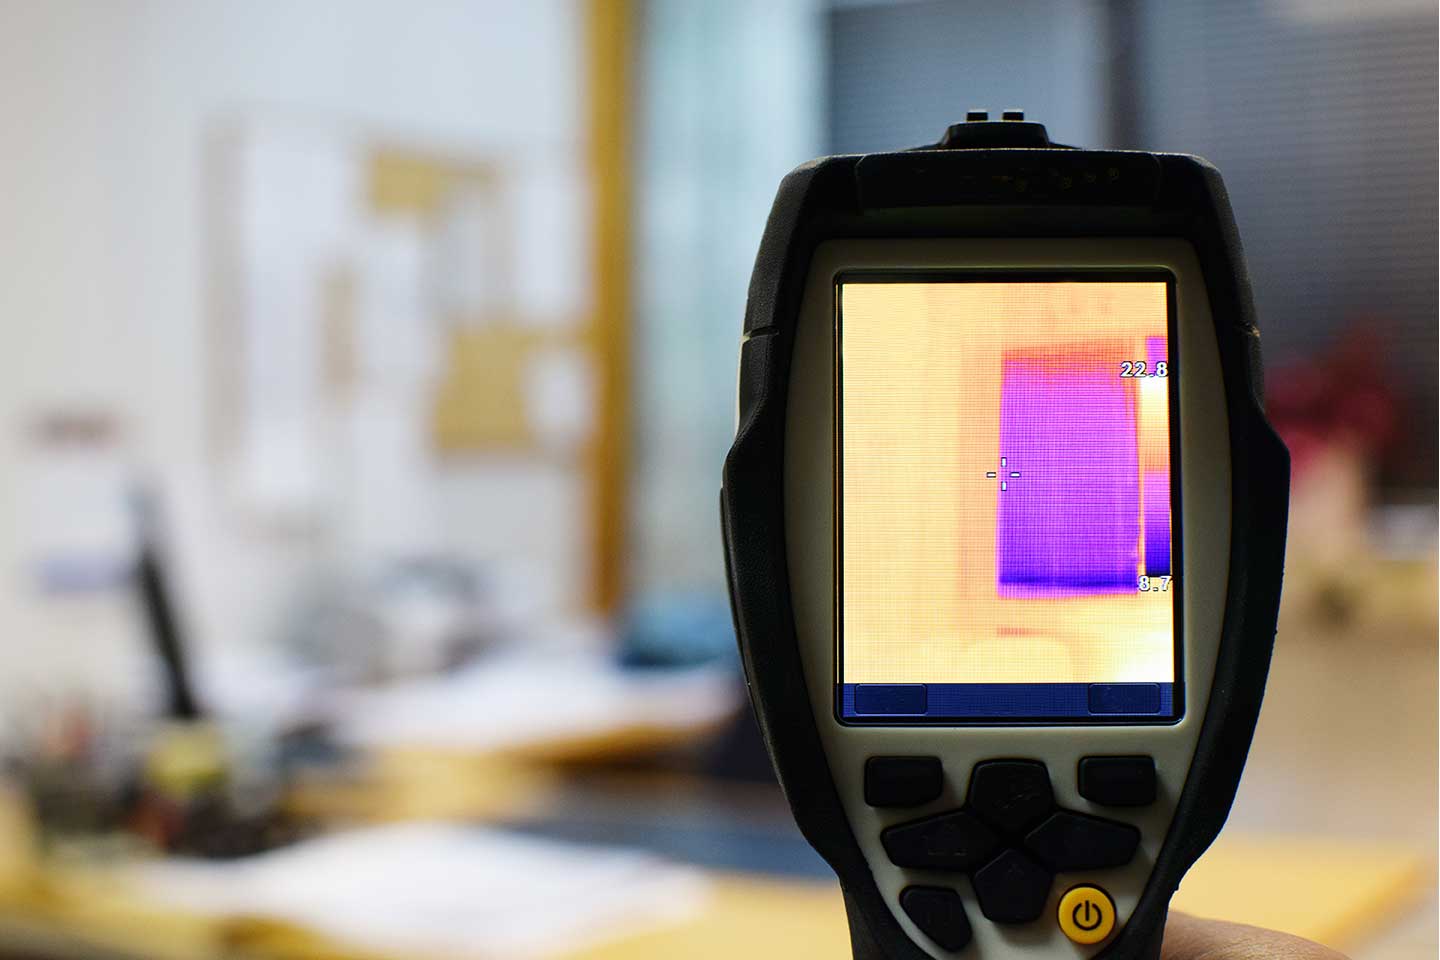 Thermal Camera/Infrared Digital Imaging Thermometer